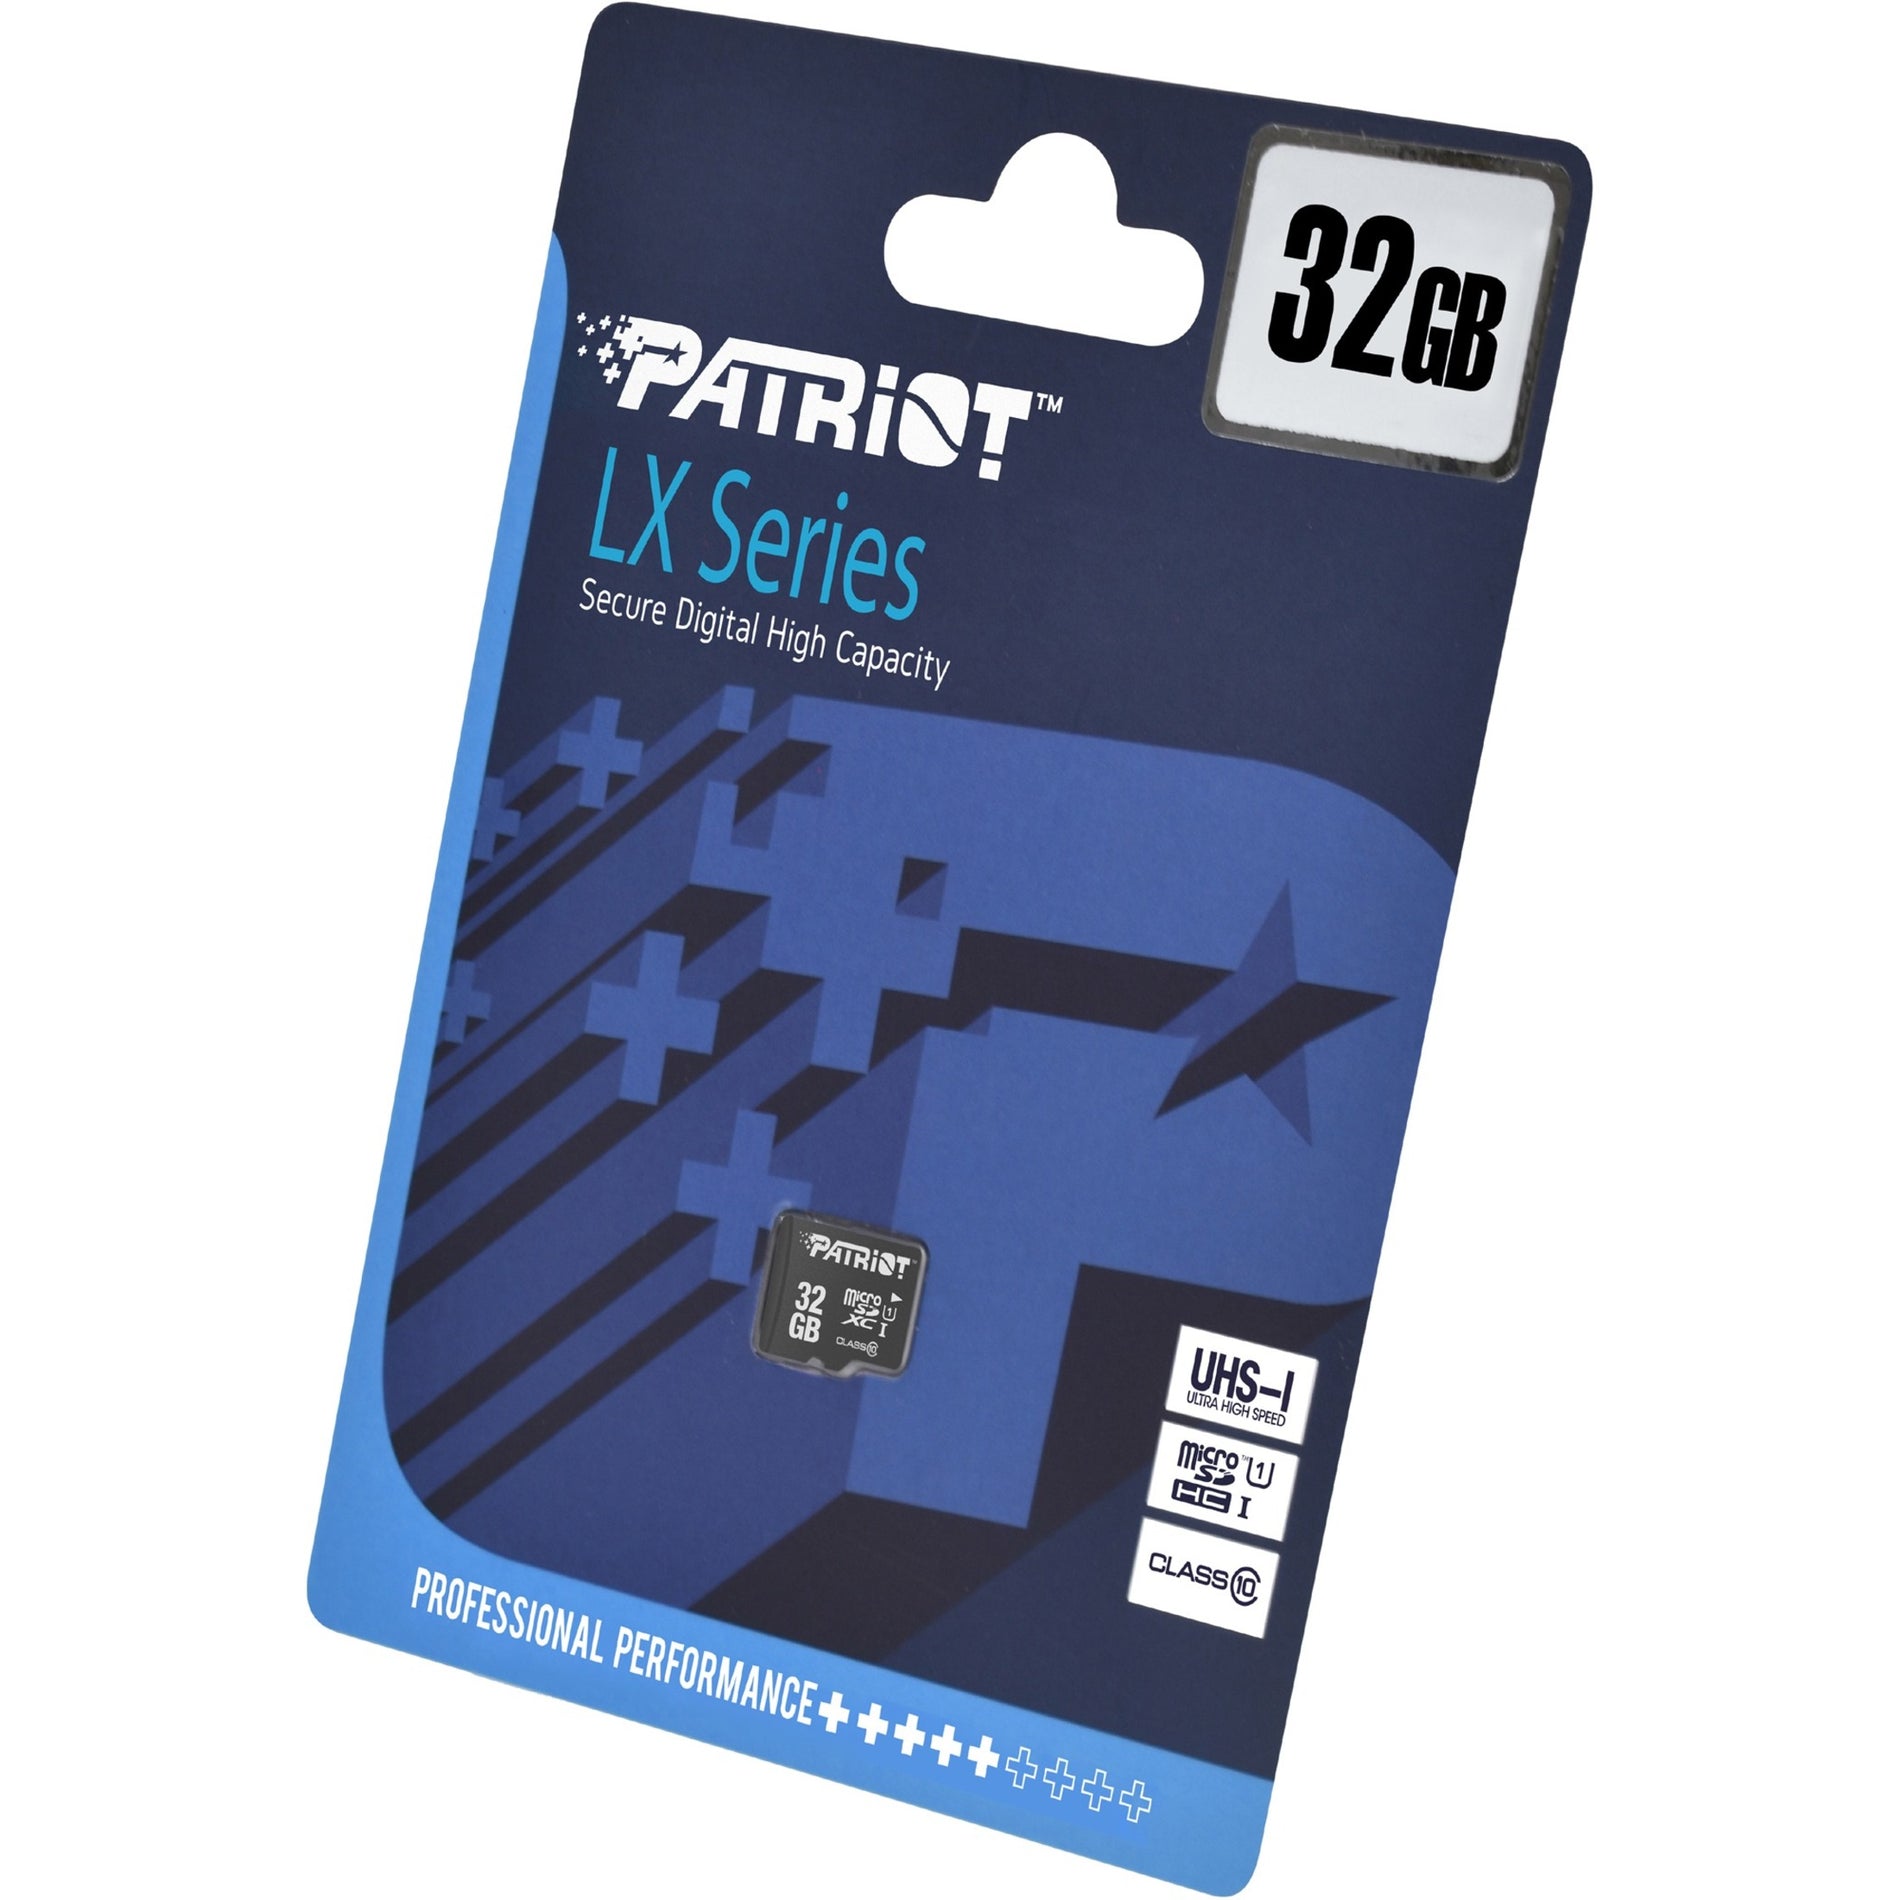 Patriot Memory PSF32GMDC10 LX 32GB microSDHC Card, 2 Year Limited Warranty, Class 10/UHS-I (U1), 80 MB/s Maximum Read Speed